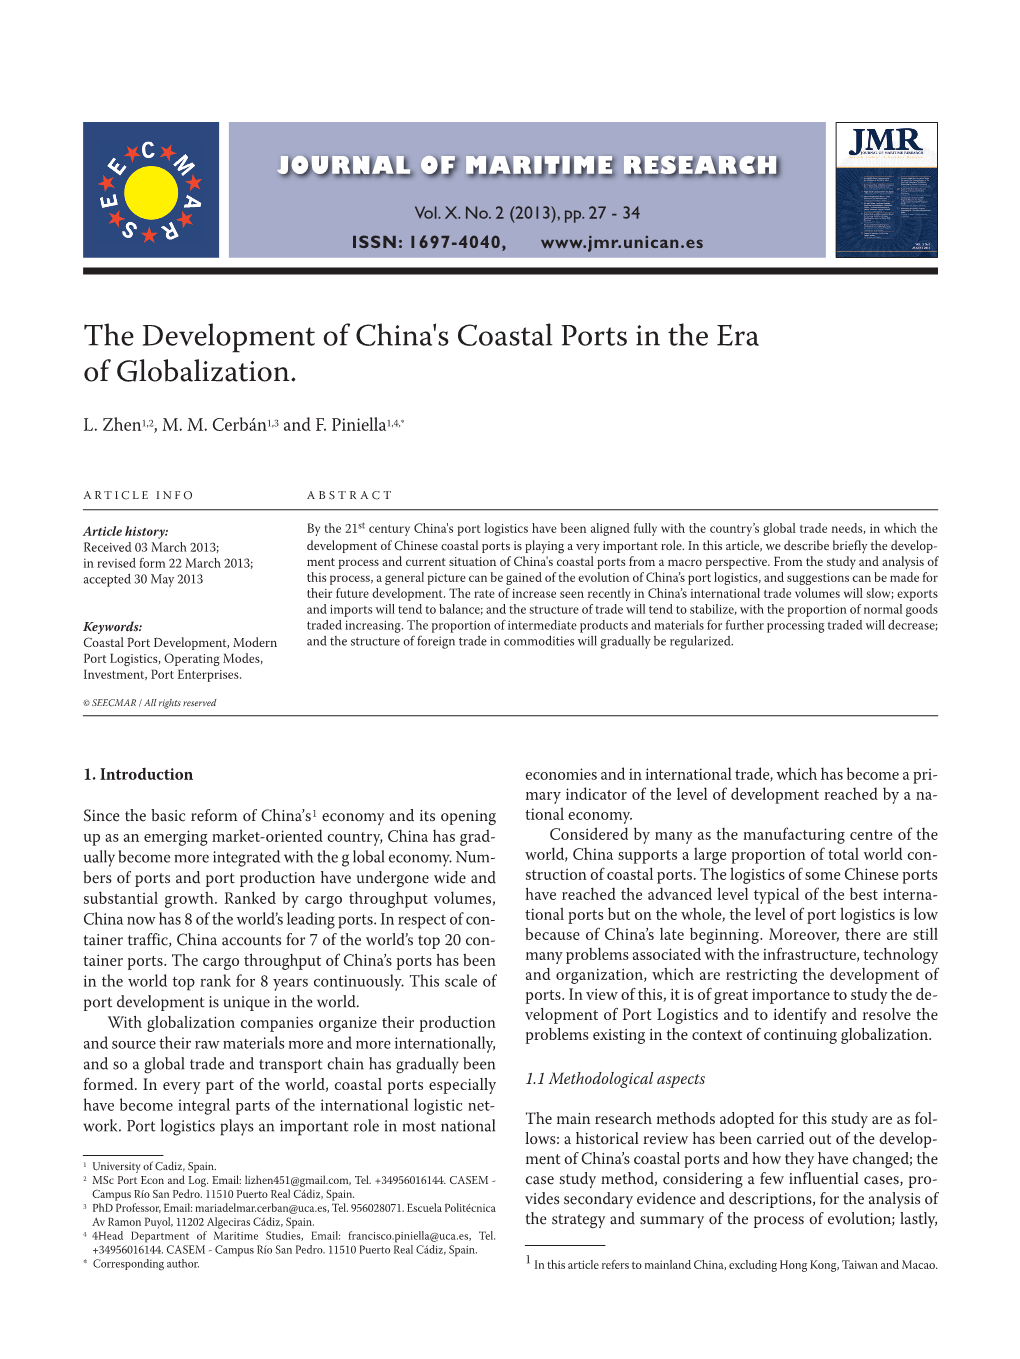 The Development of China's Coastal Ports in the Era of Globalization